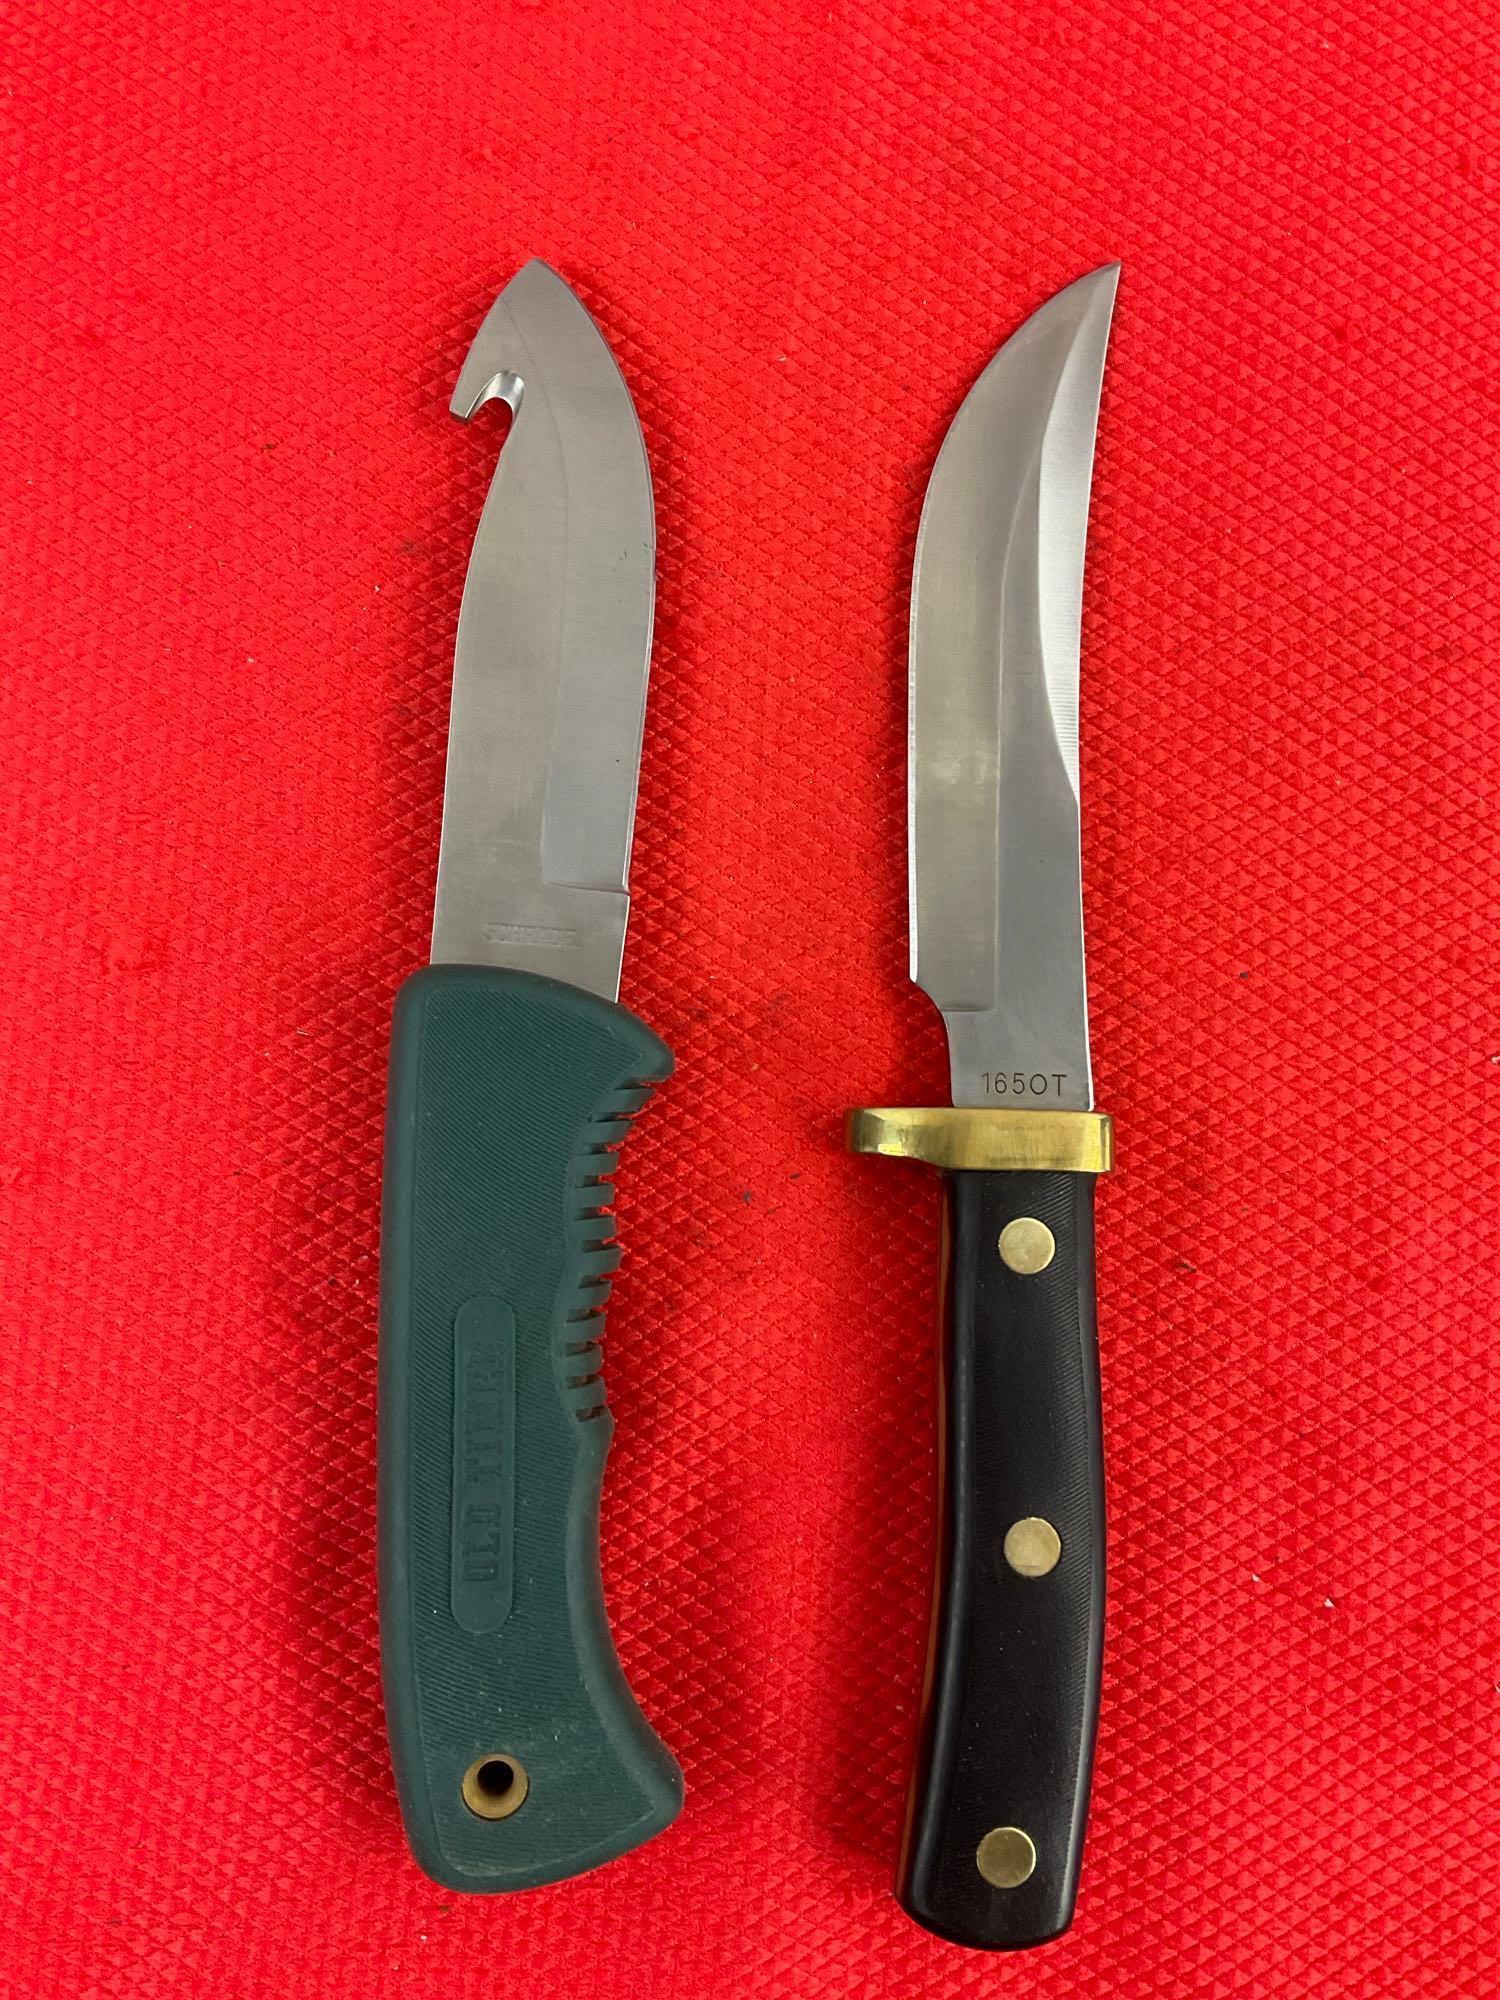 2 pcs Schrade Steel Fixed Blade Hunting Knives w/ Sheathes Models 1430T & 1650T. NIB. See pics.